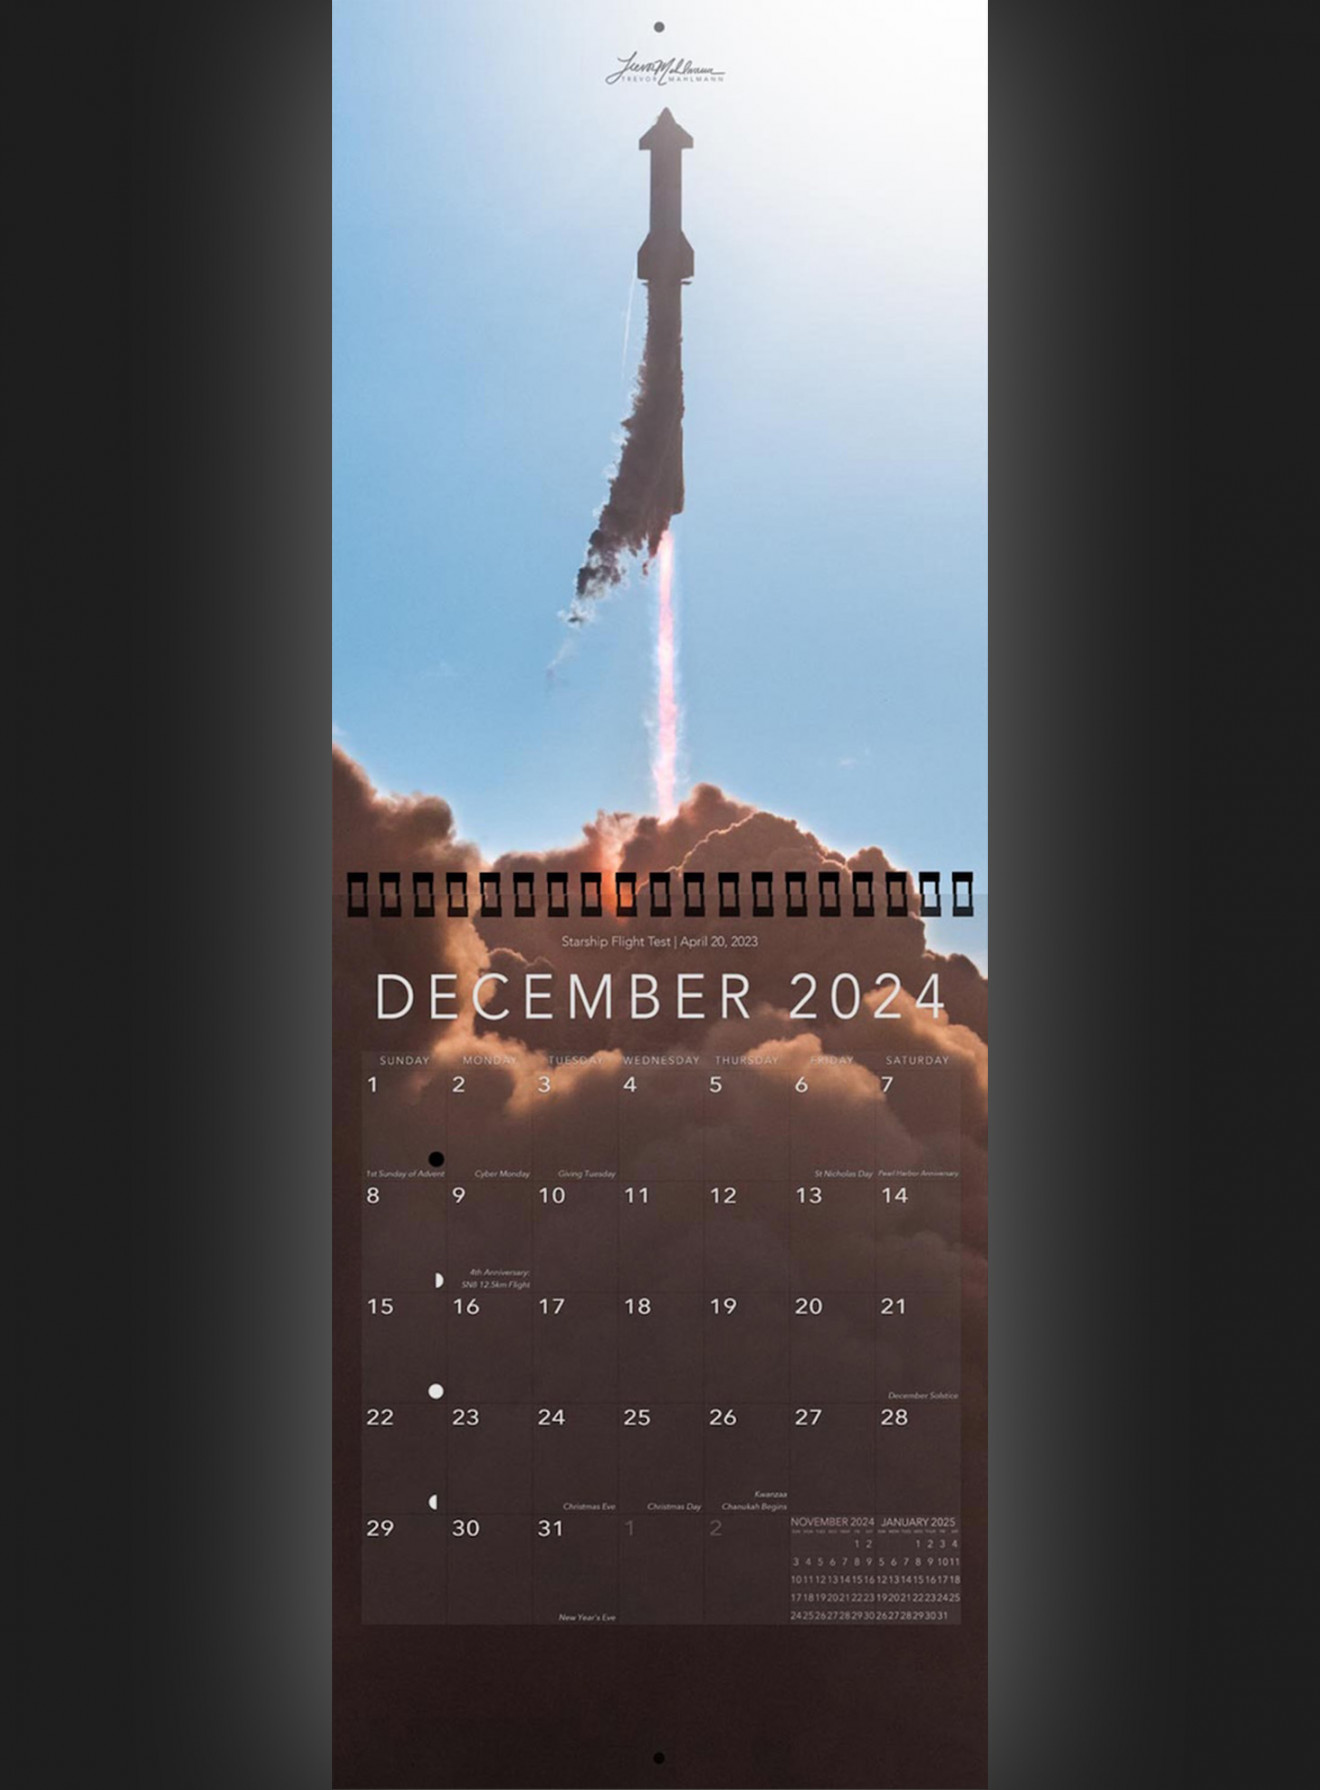 trevor s calendar starship edition